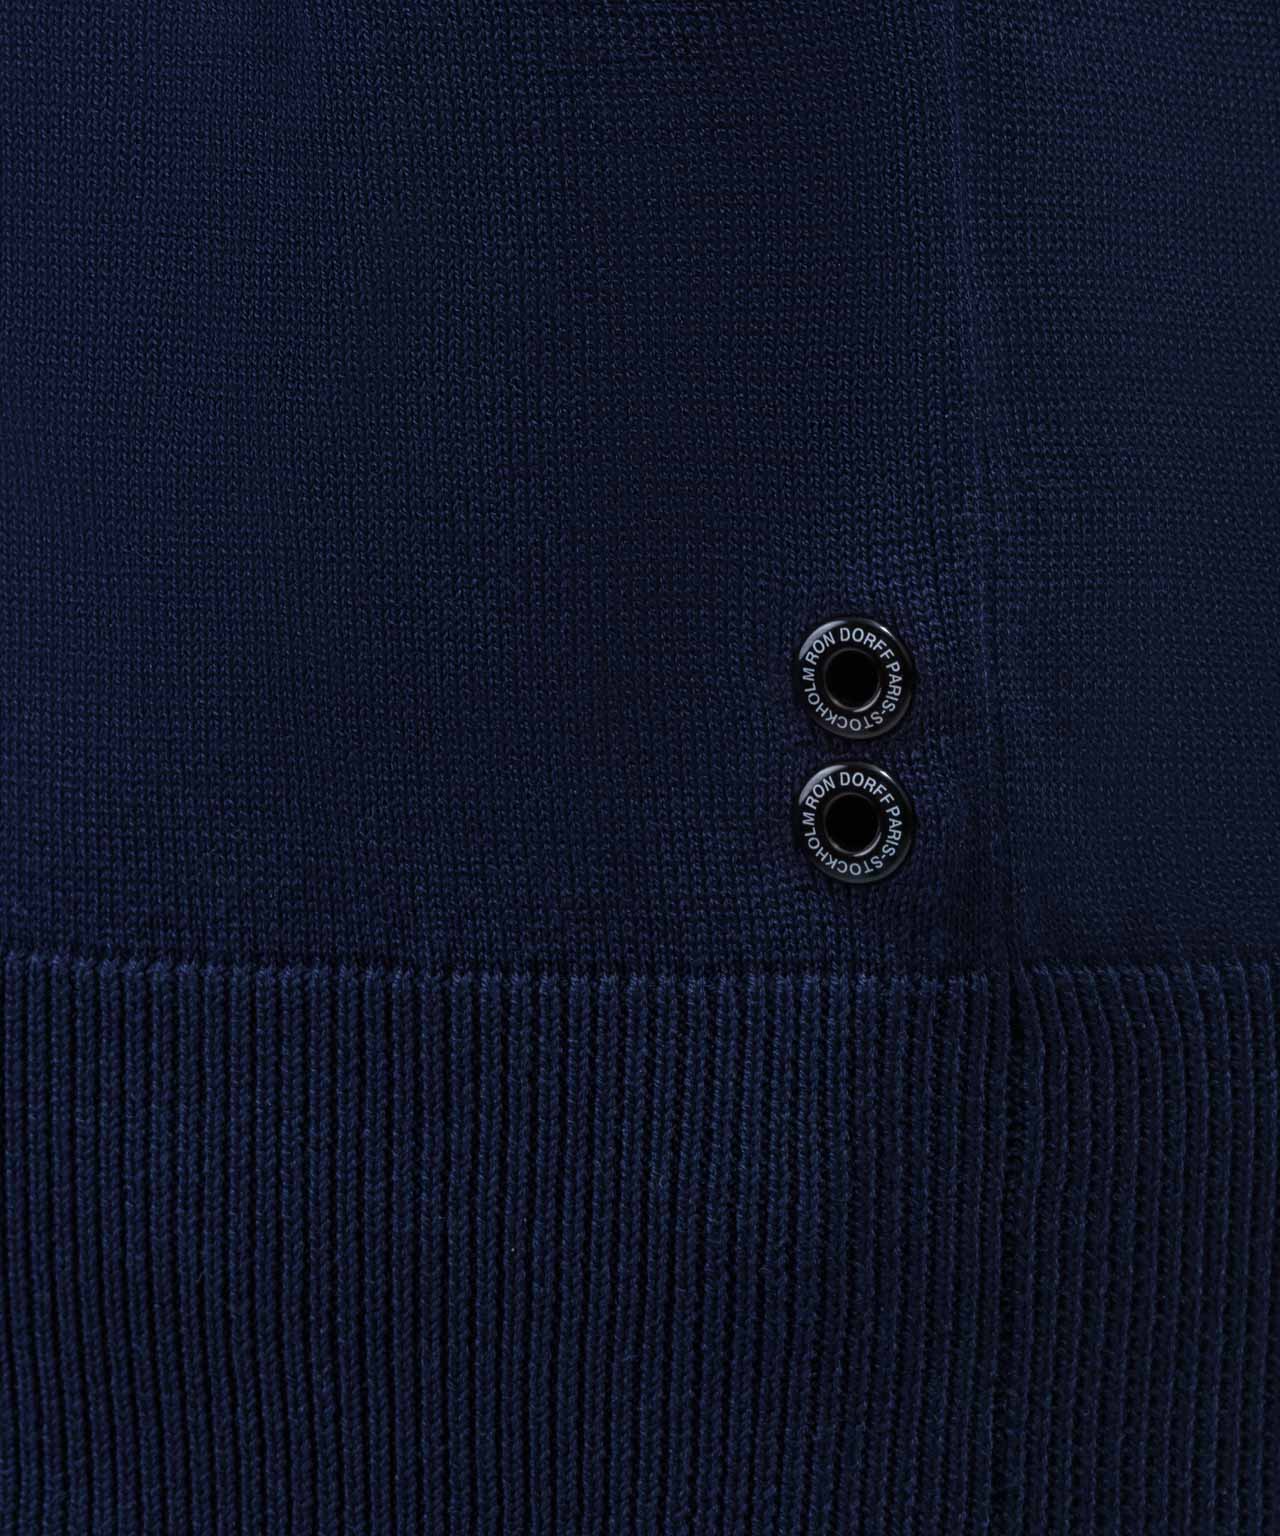 Cotton Silk Sweatshirt w Piping: Navy